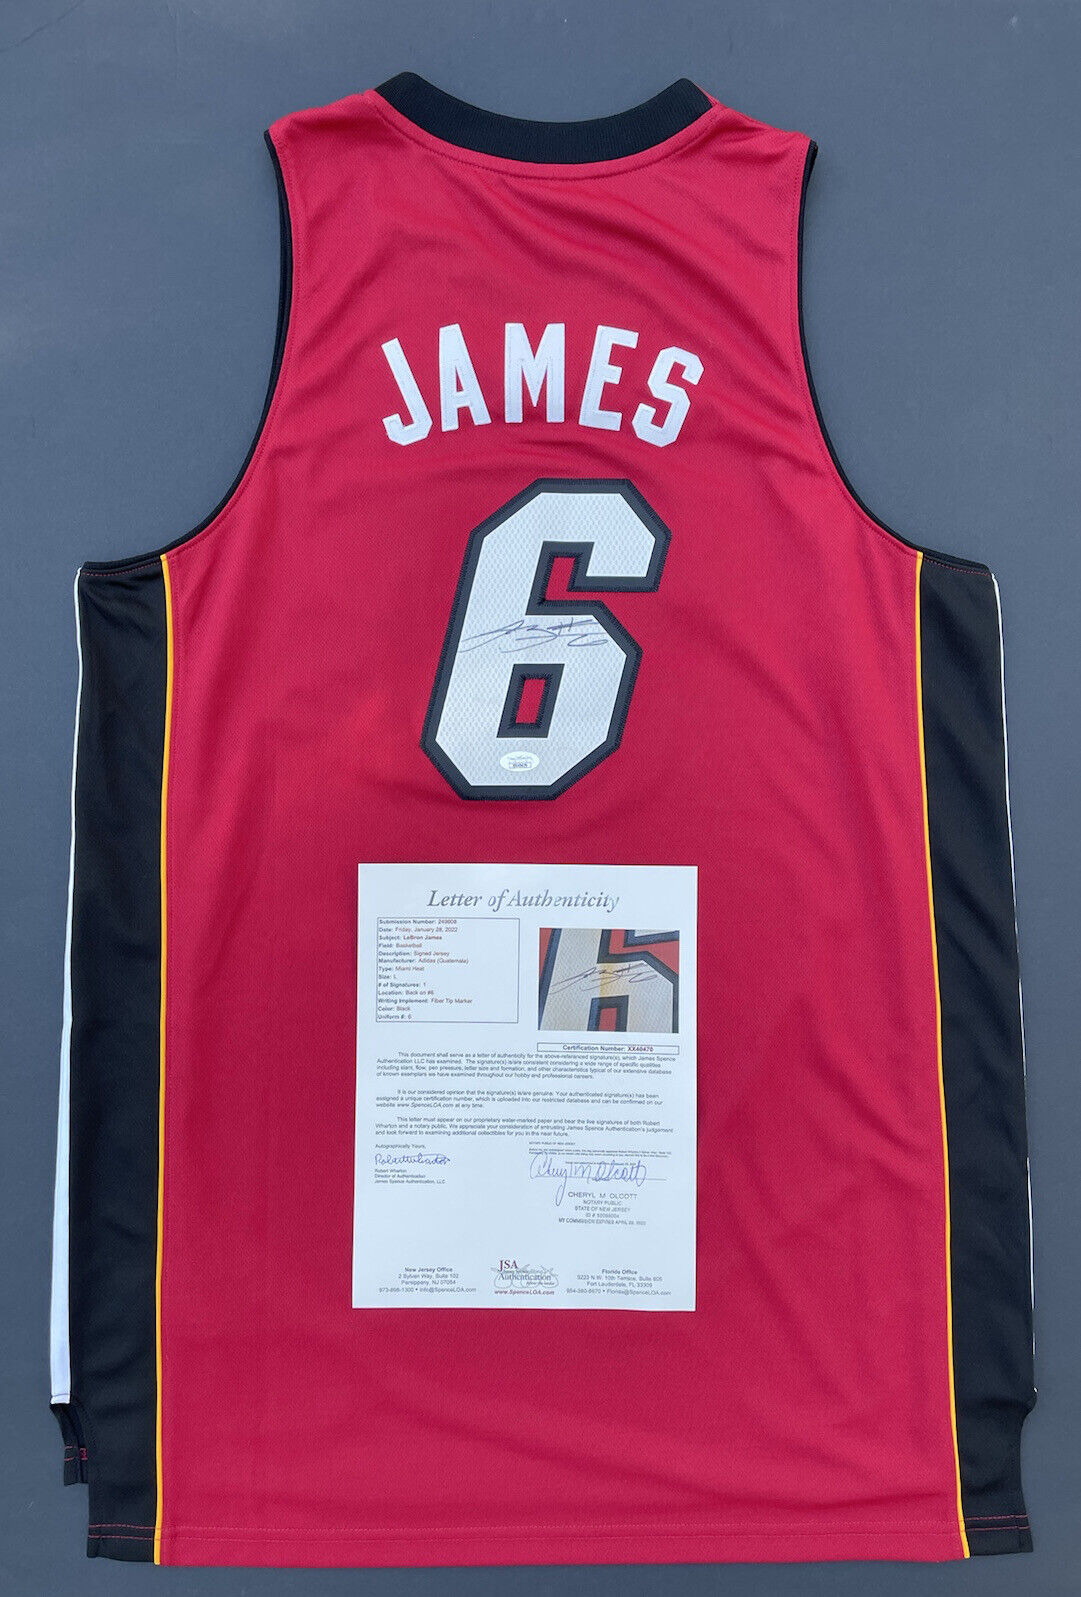 Lebron James Autographed Signed Miami Heat Jersey JSA Loa #6 #23 Cavaliers Lakers King James